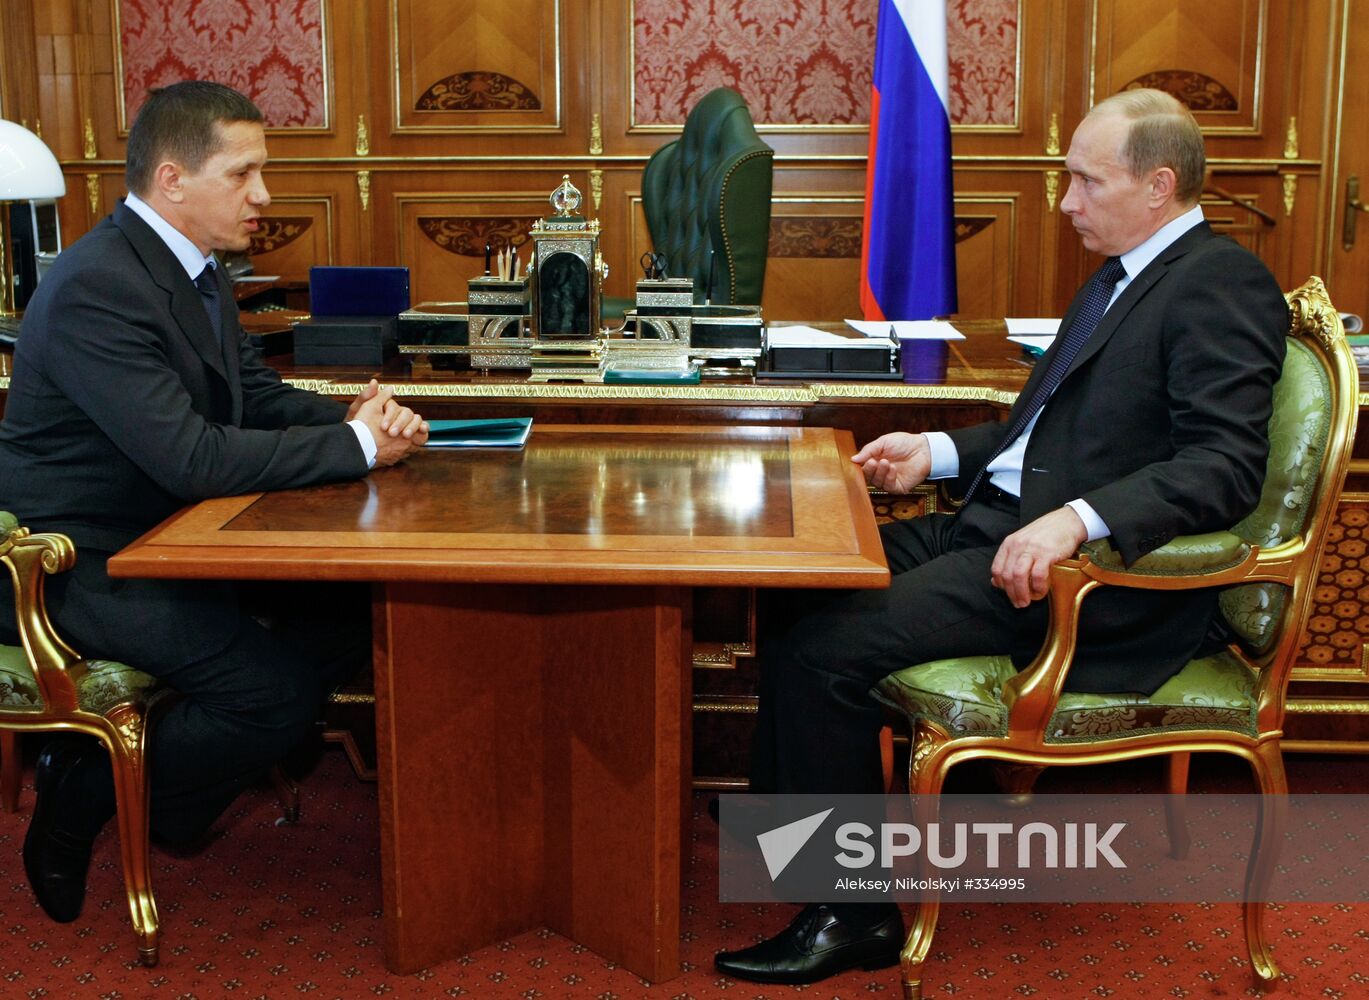 Vladimir Putin and Yury Trutnev